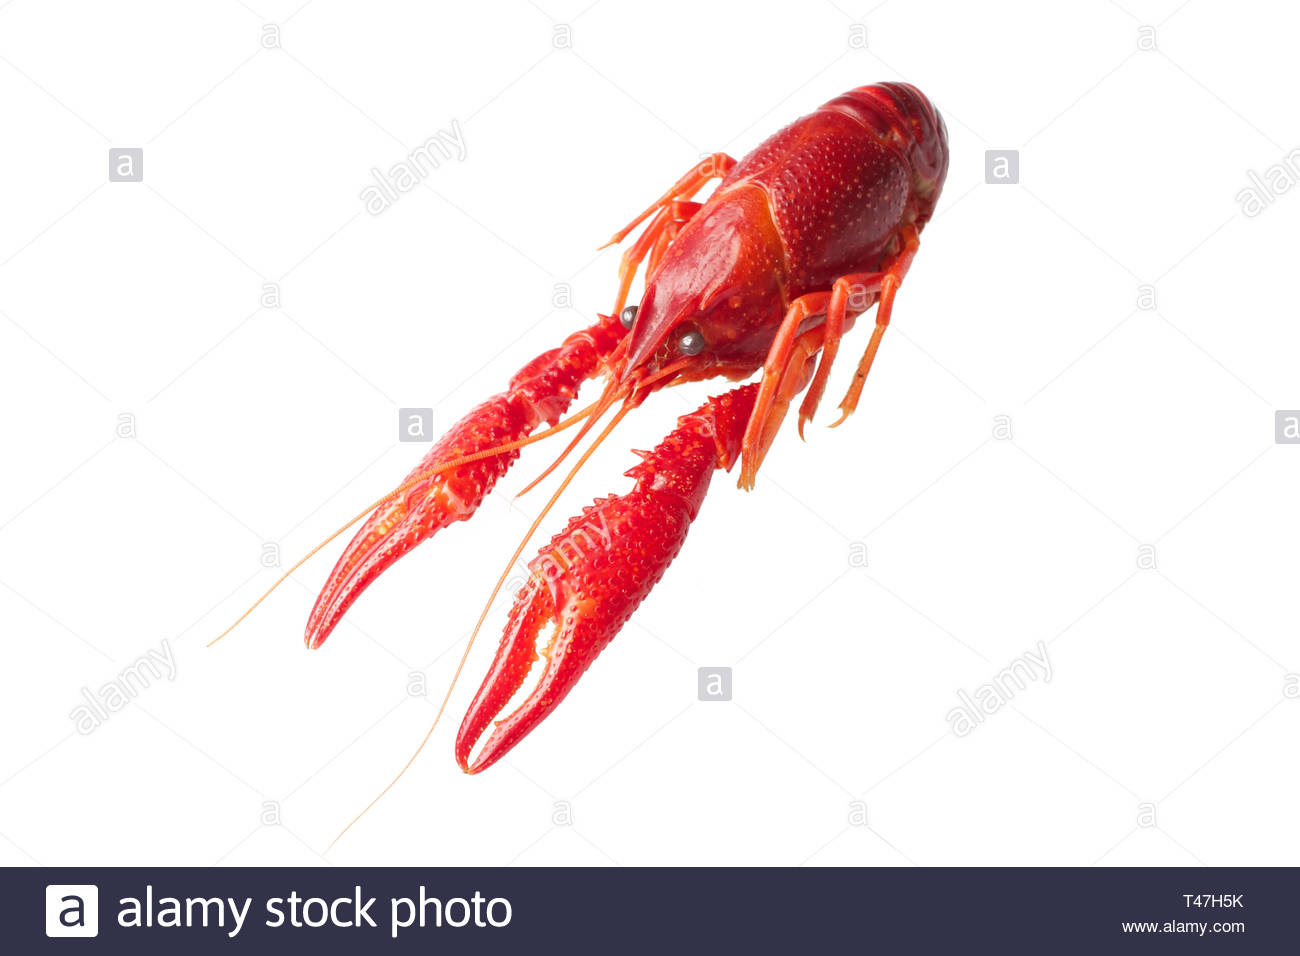 Boiled Red Crawfish Isolated On White Background Stock Photo